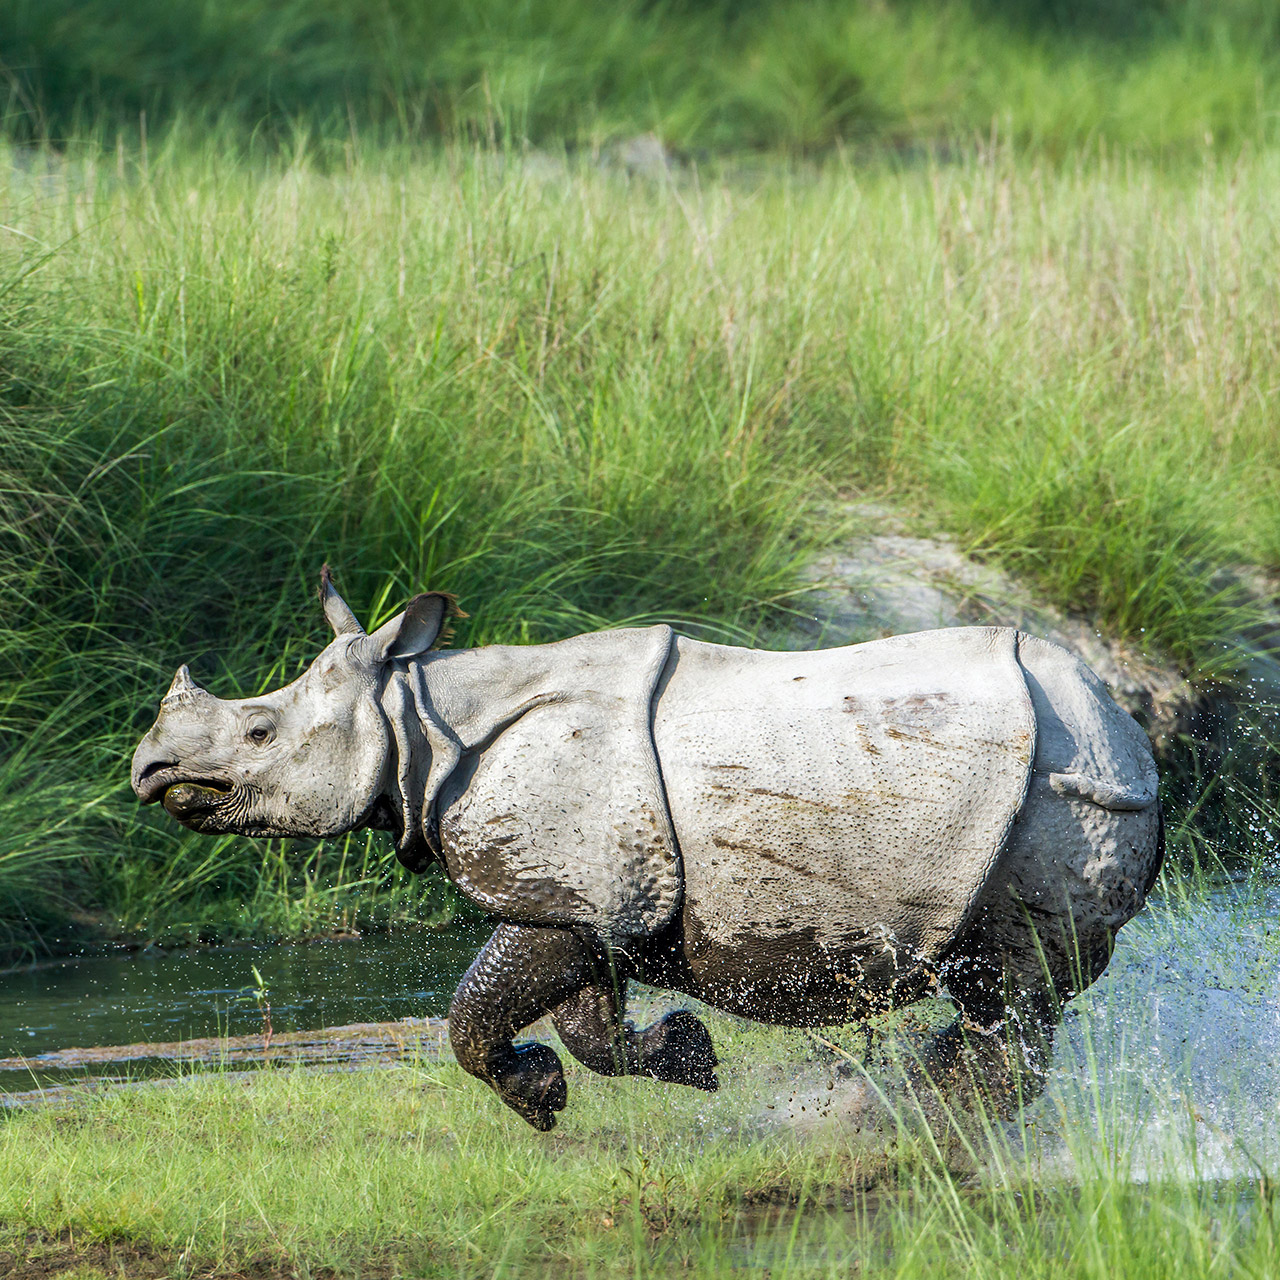 Greater one-horned rhino running